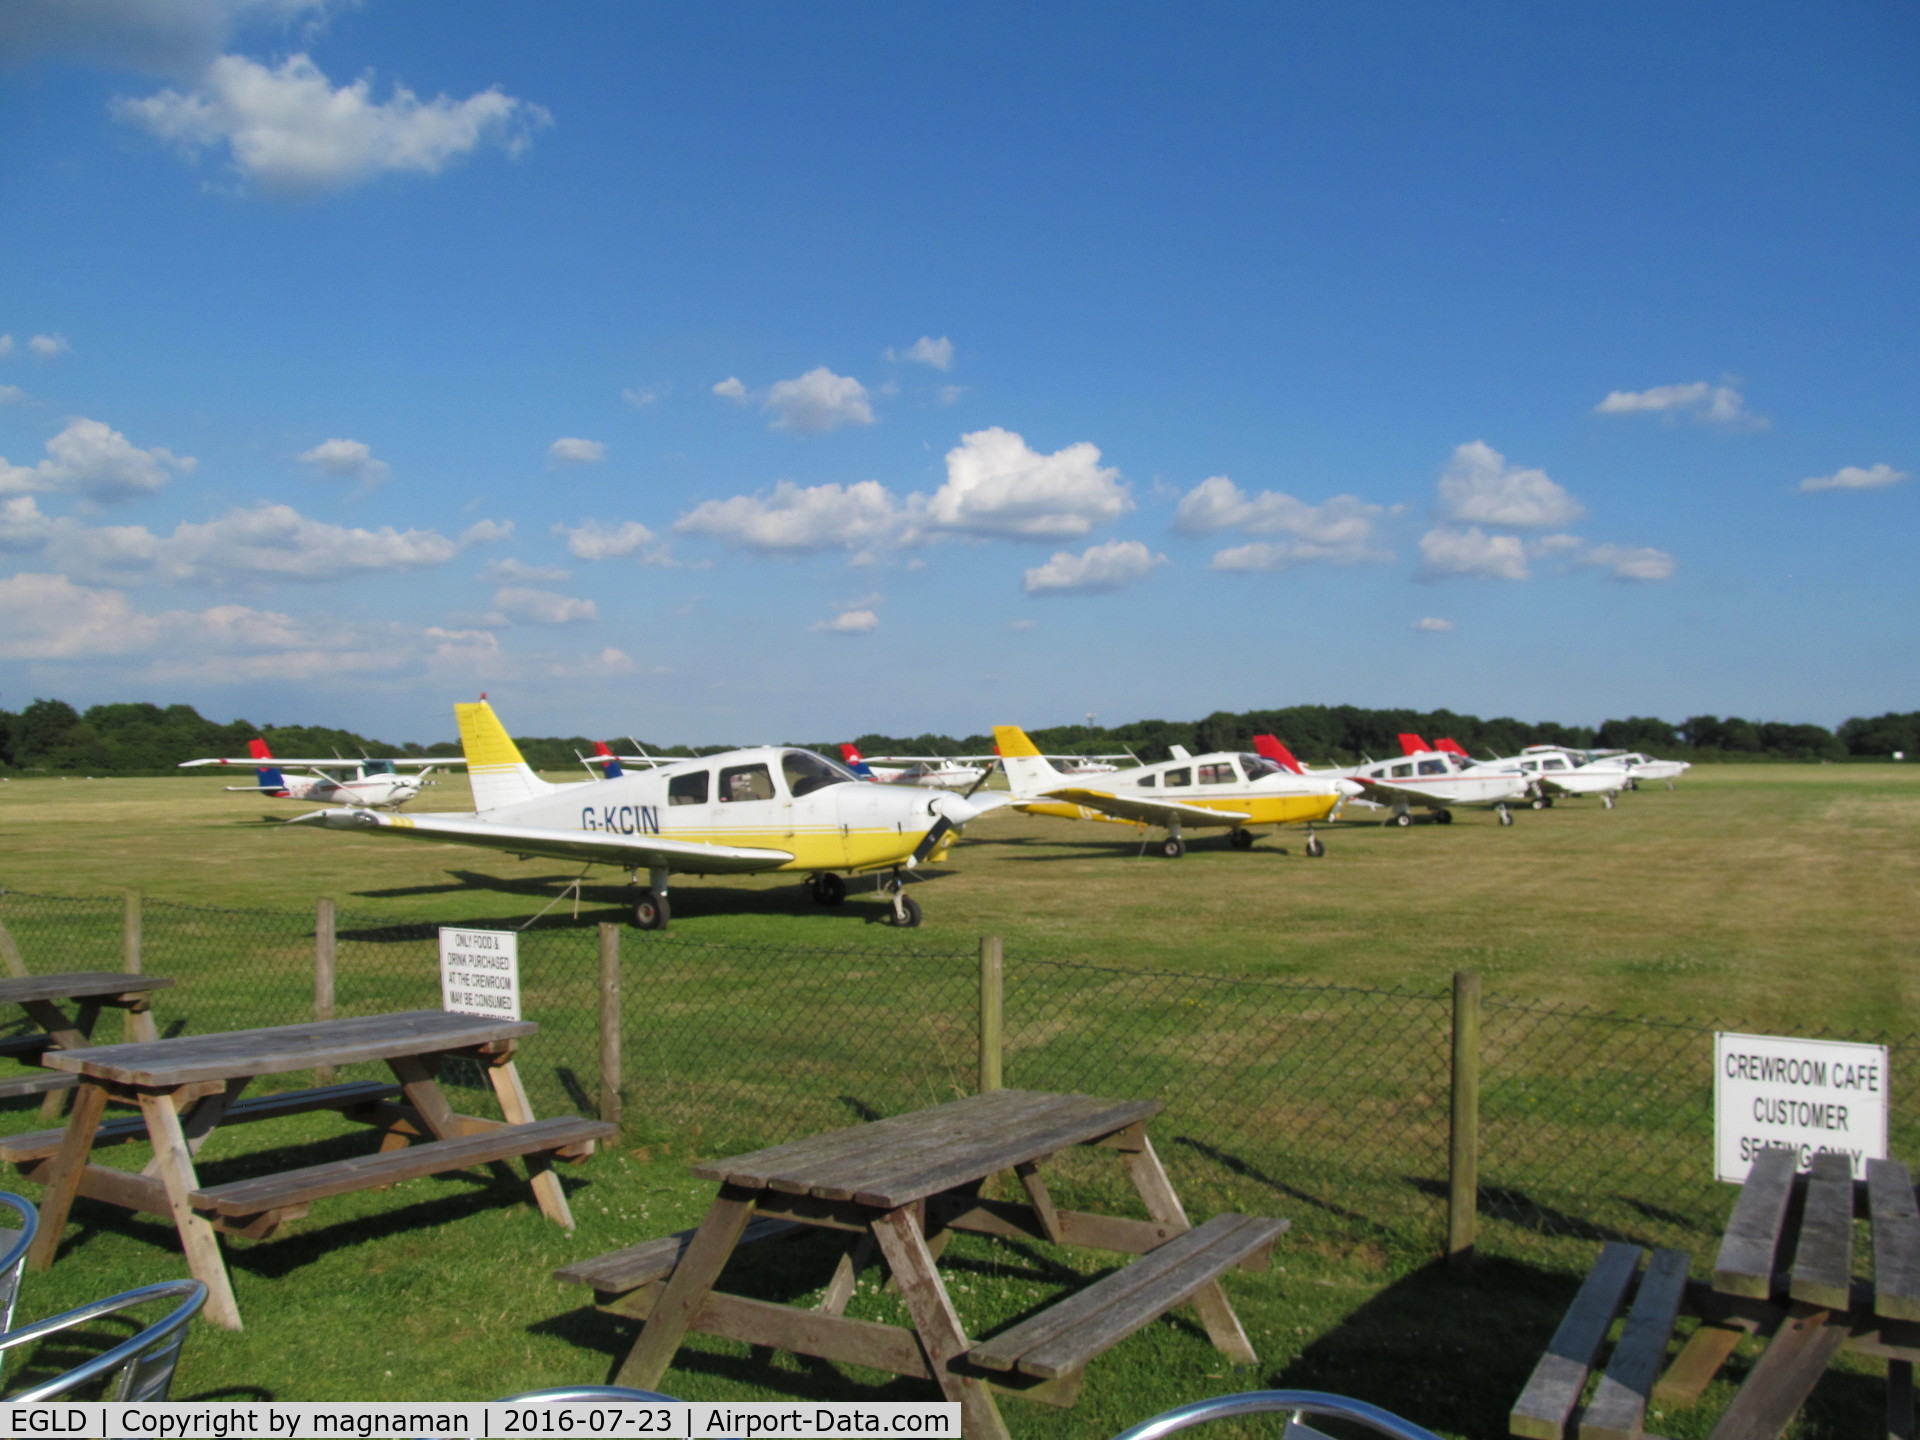 Denham Aerodrome Airport, Gerrards Cross, England United Kingdom (EGLD) - KCIN plus others at Denham - by cafe